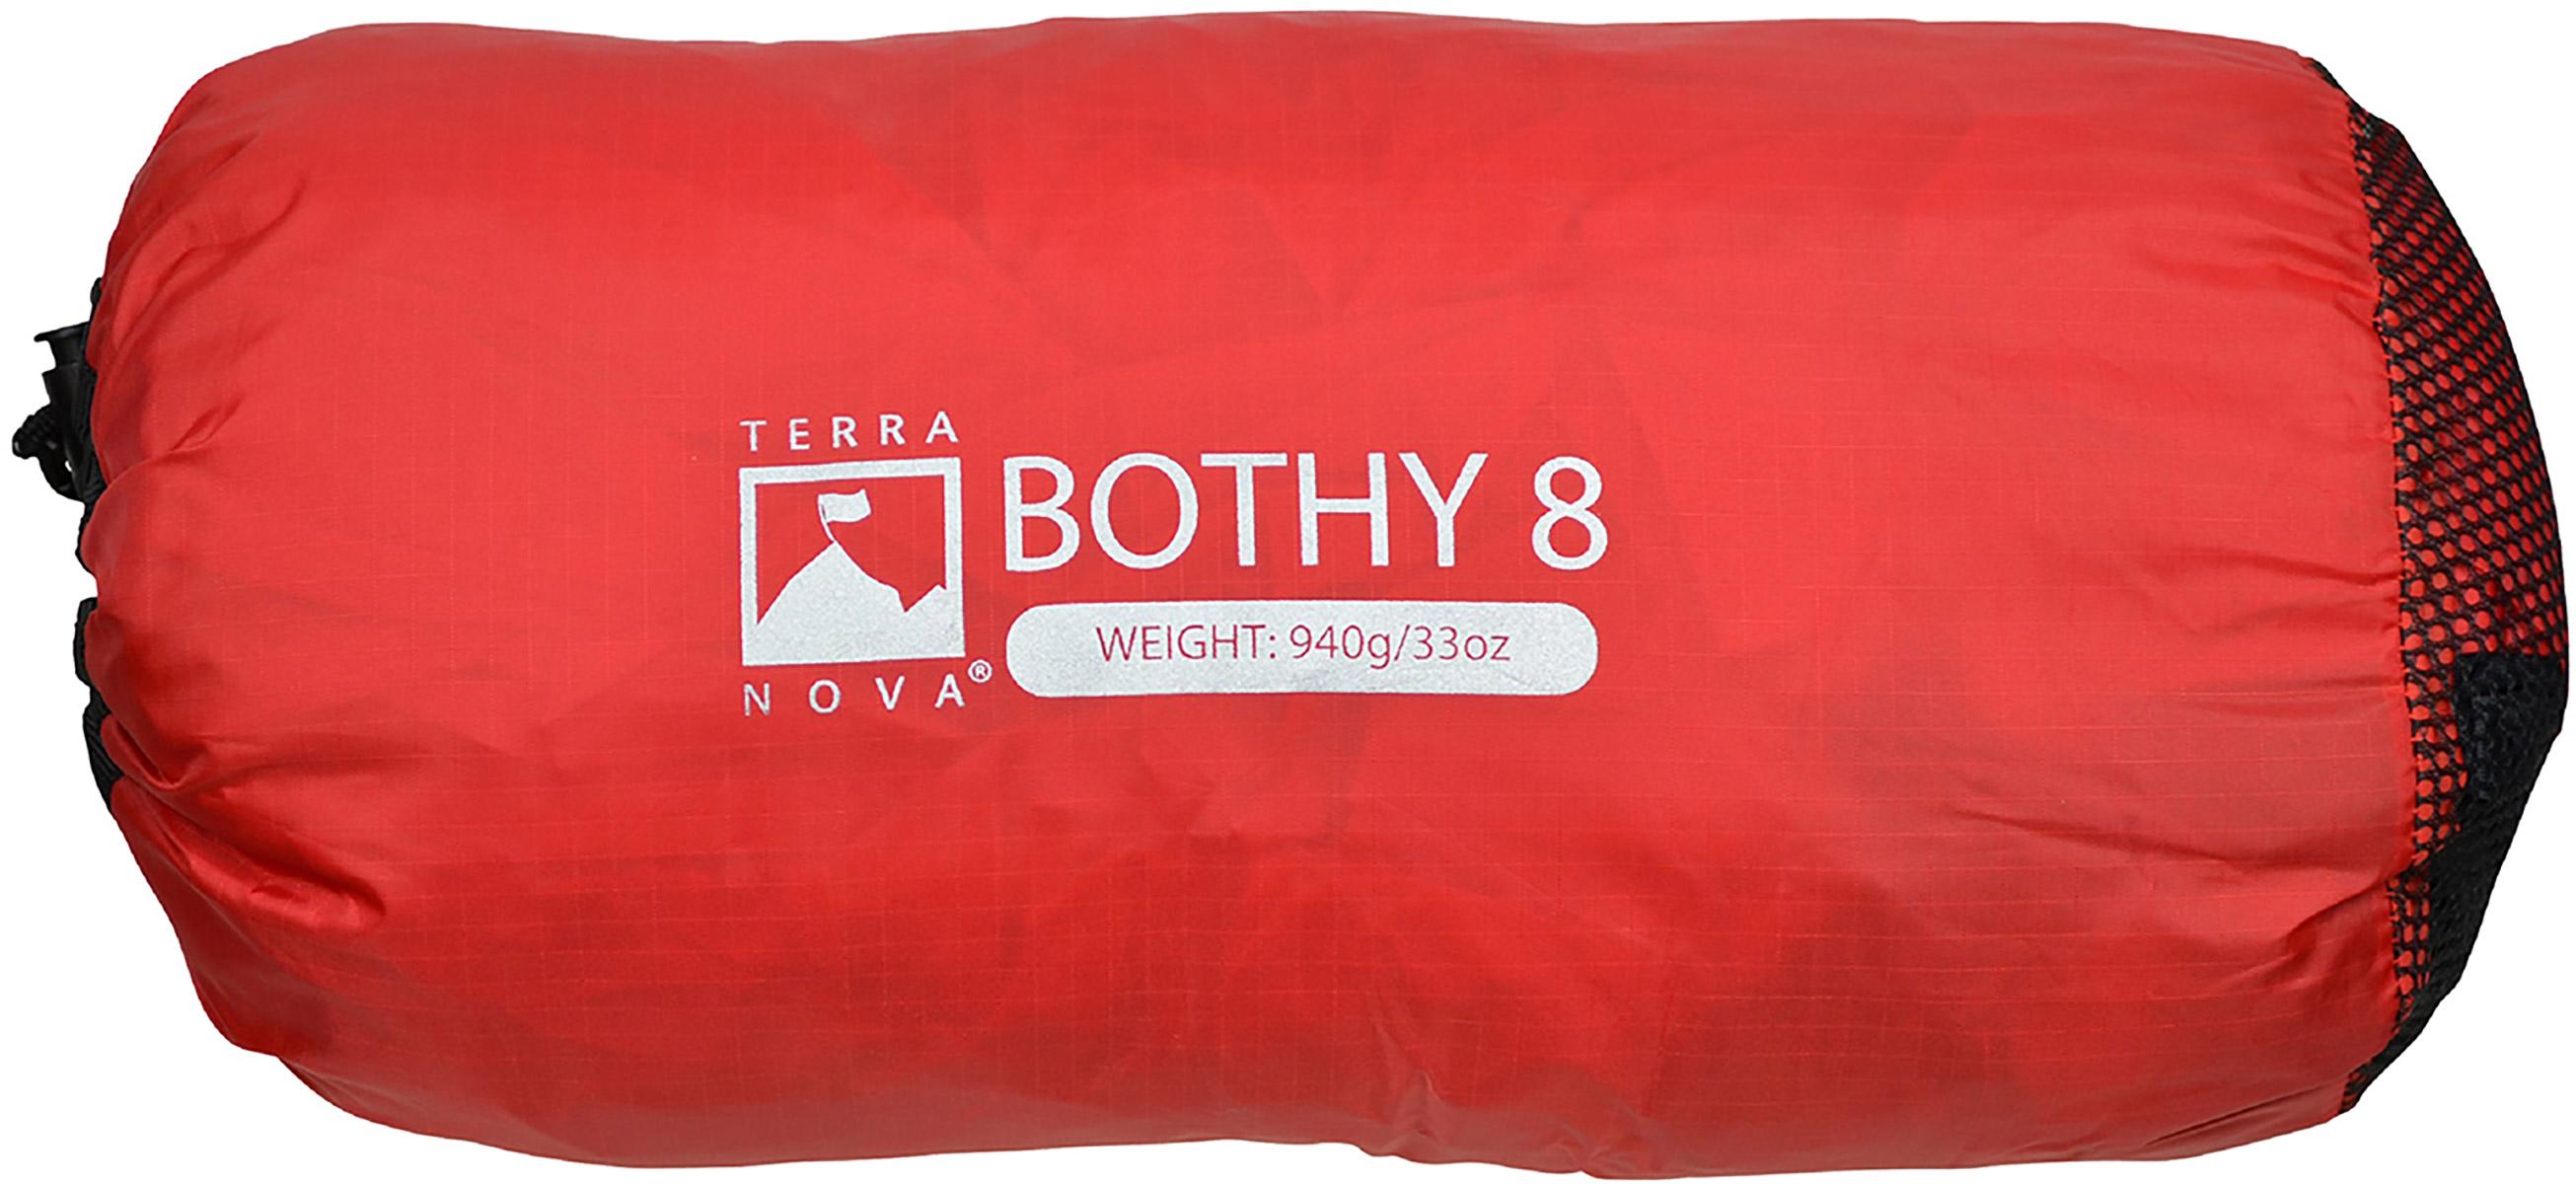 Terra Nova Bothy 8 - Red